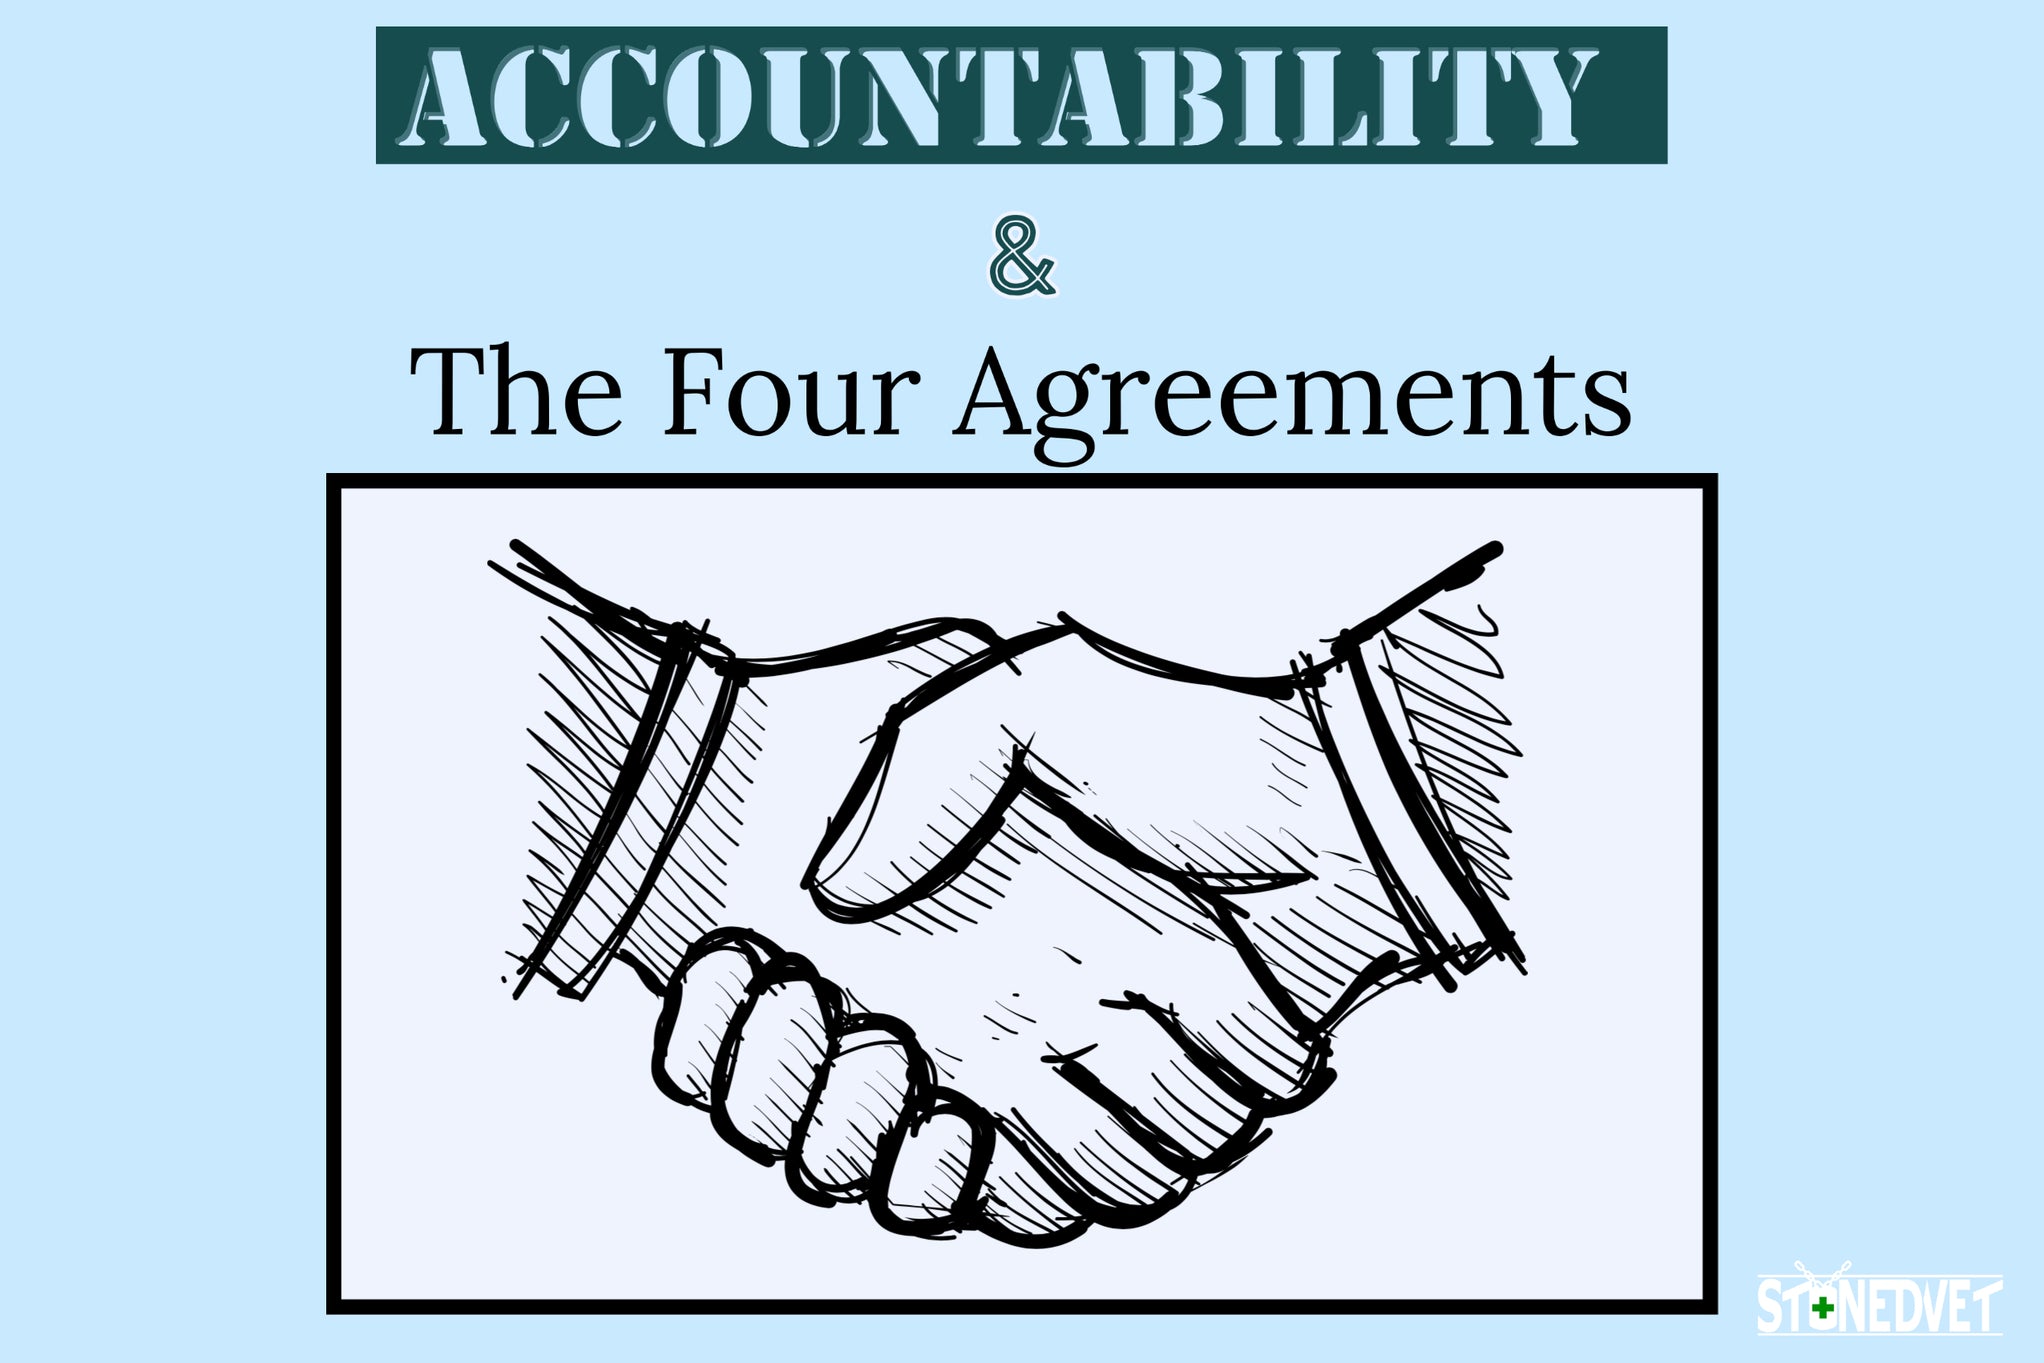 Accountability & The Four Agreements